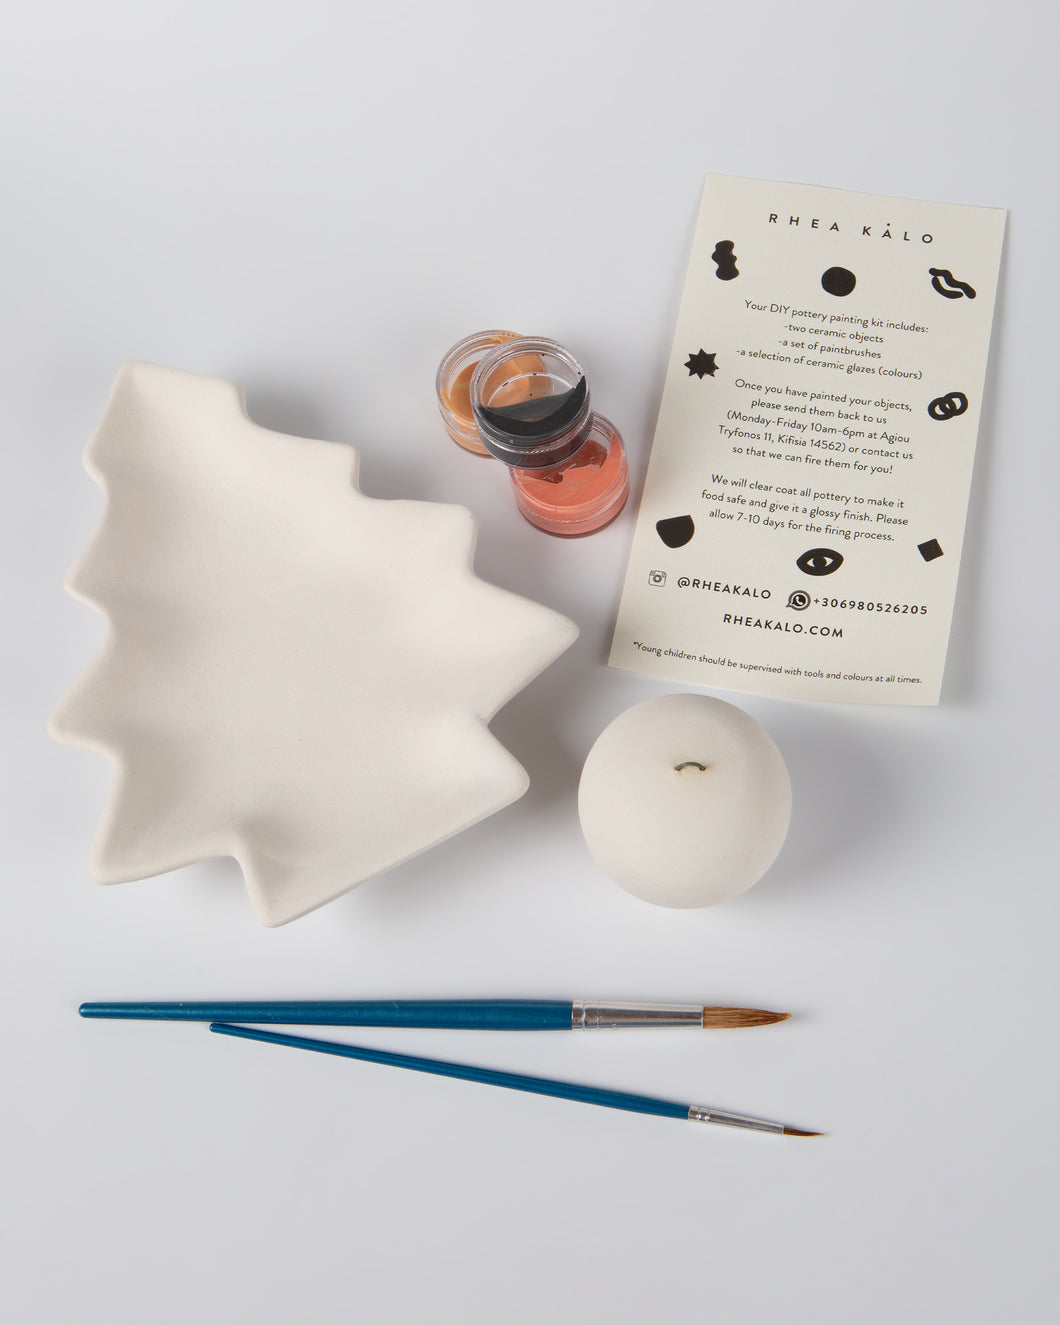 Festive DIY pottery painting kit